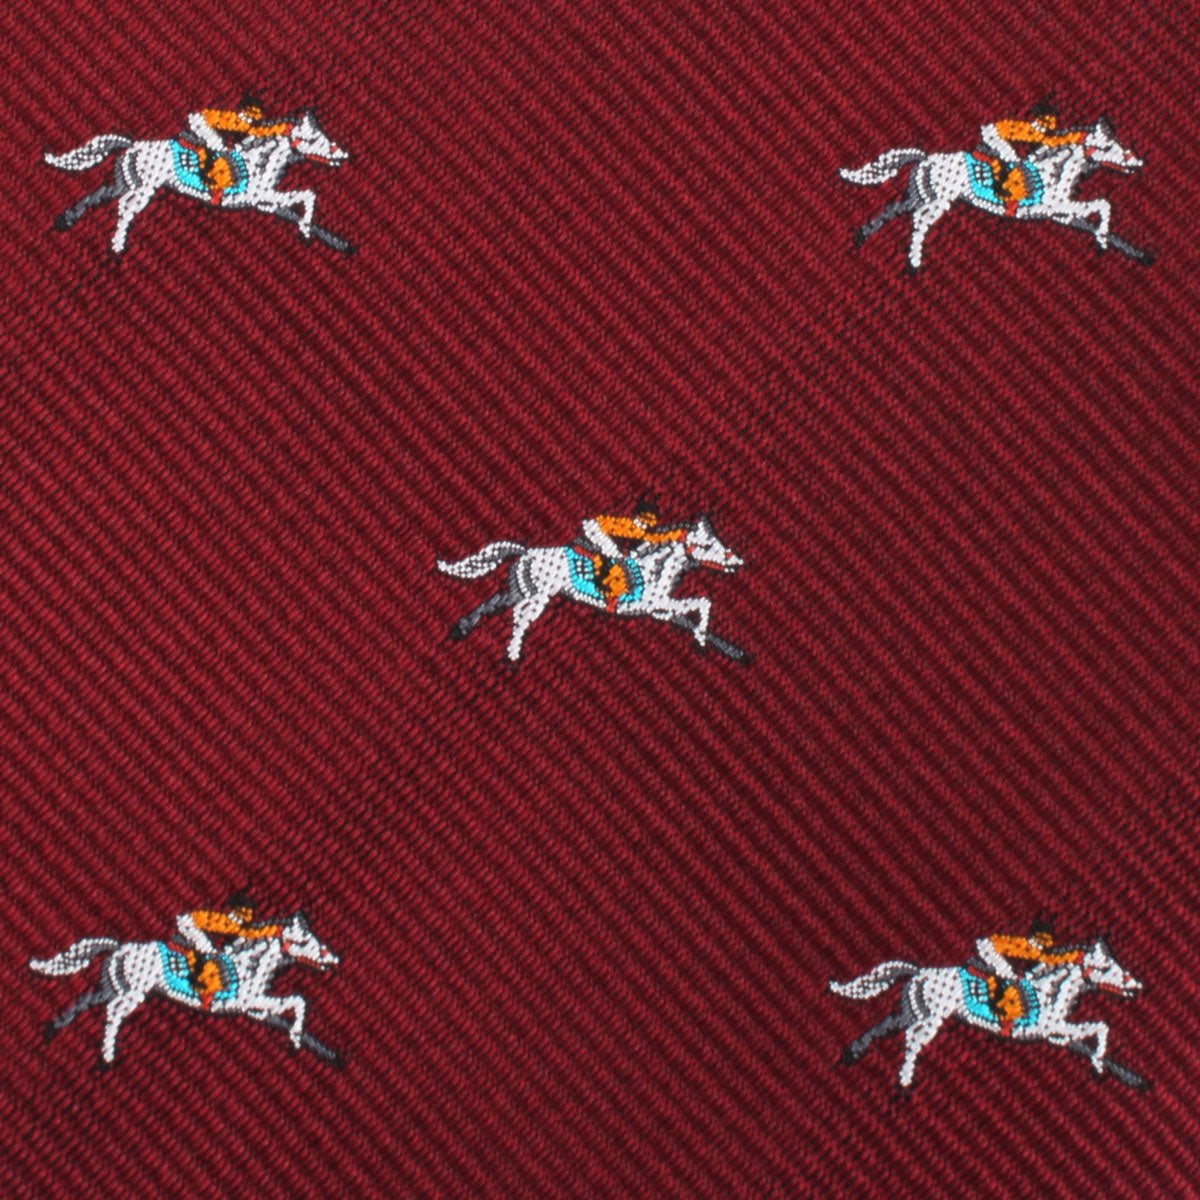 Kentucky Derby Race Horse Necktie Fabric